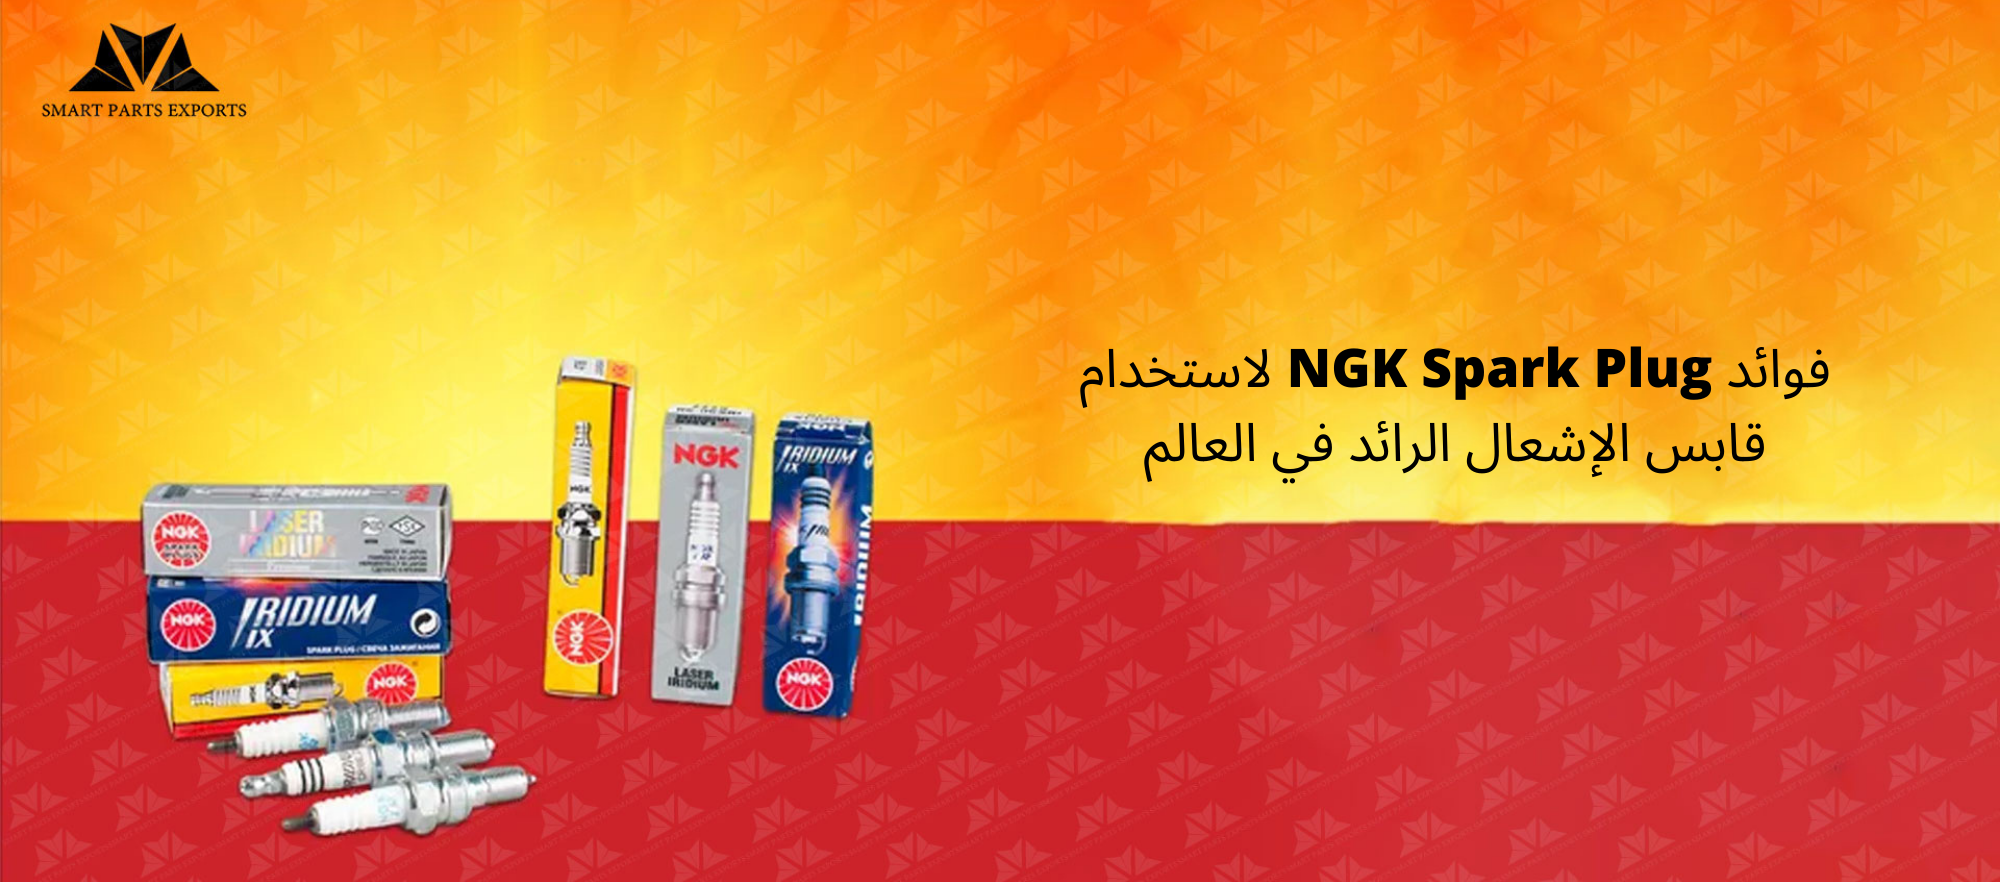 Read more about the article NGK Spark Plug: فوائد استخدام شمعة الإشعال الرائدة في العالم